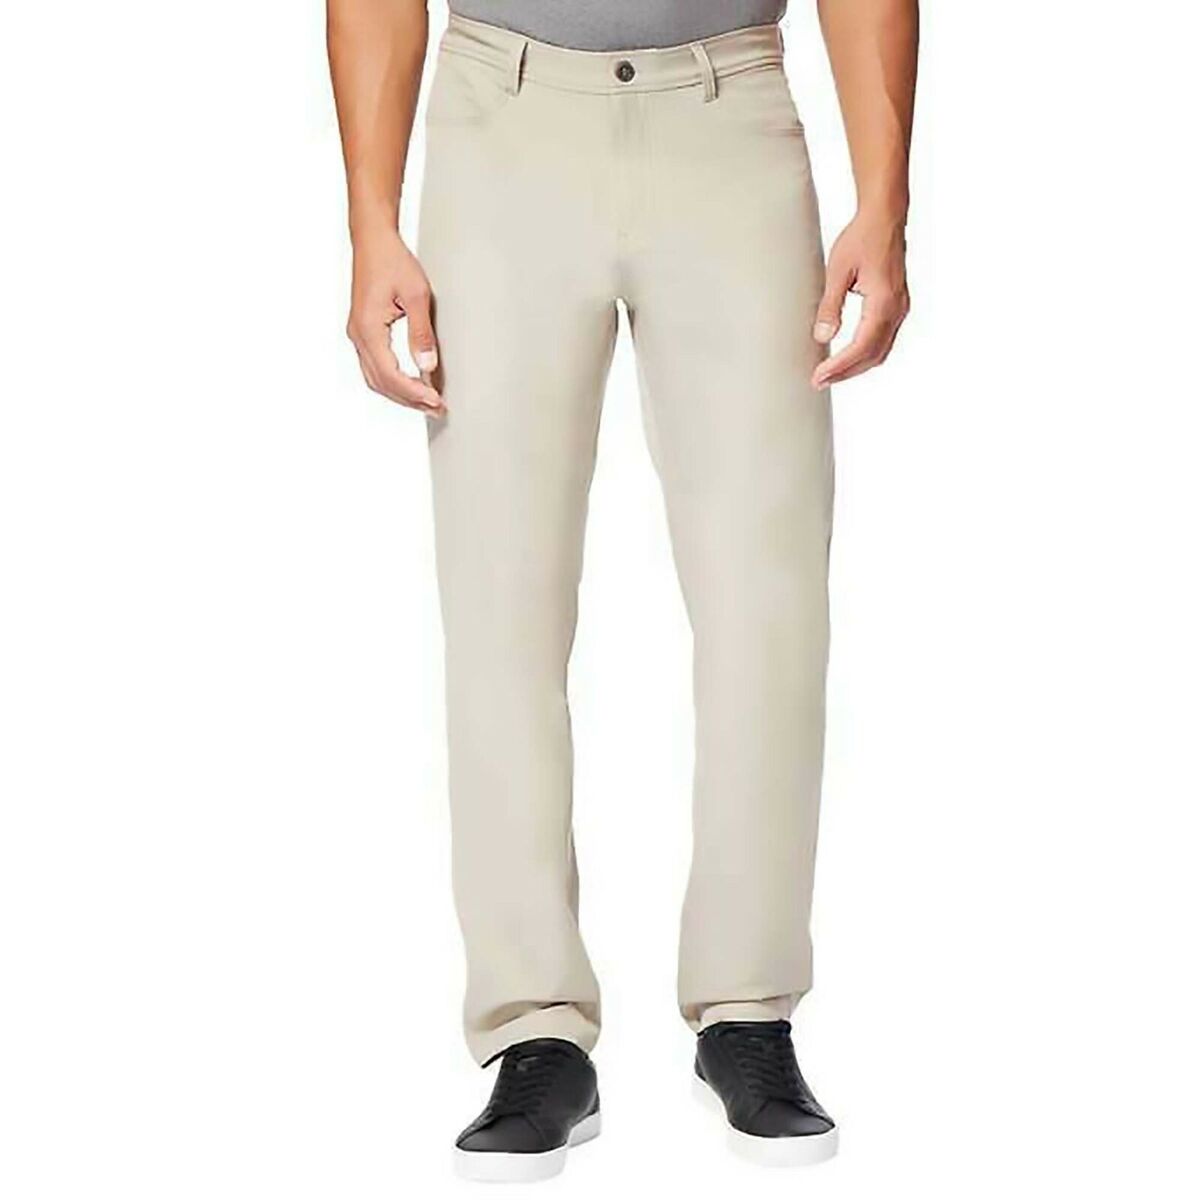 32 Degrees Cool Men's Tweed 5-Pocket Soft Stretch Pants, TAN, Size